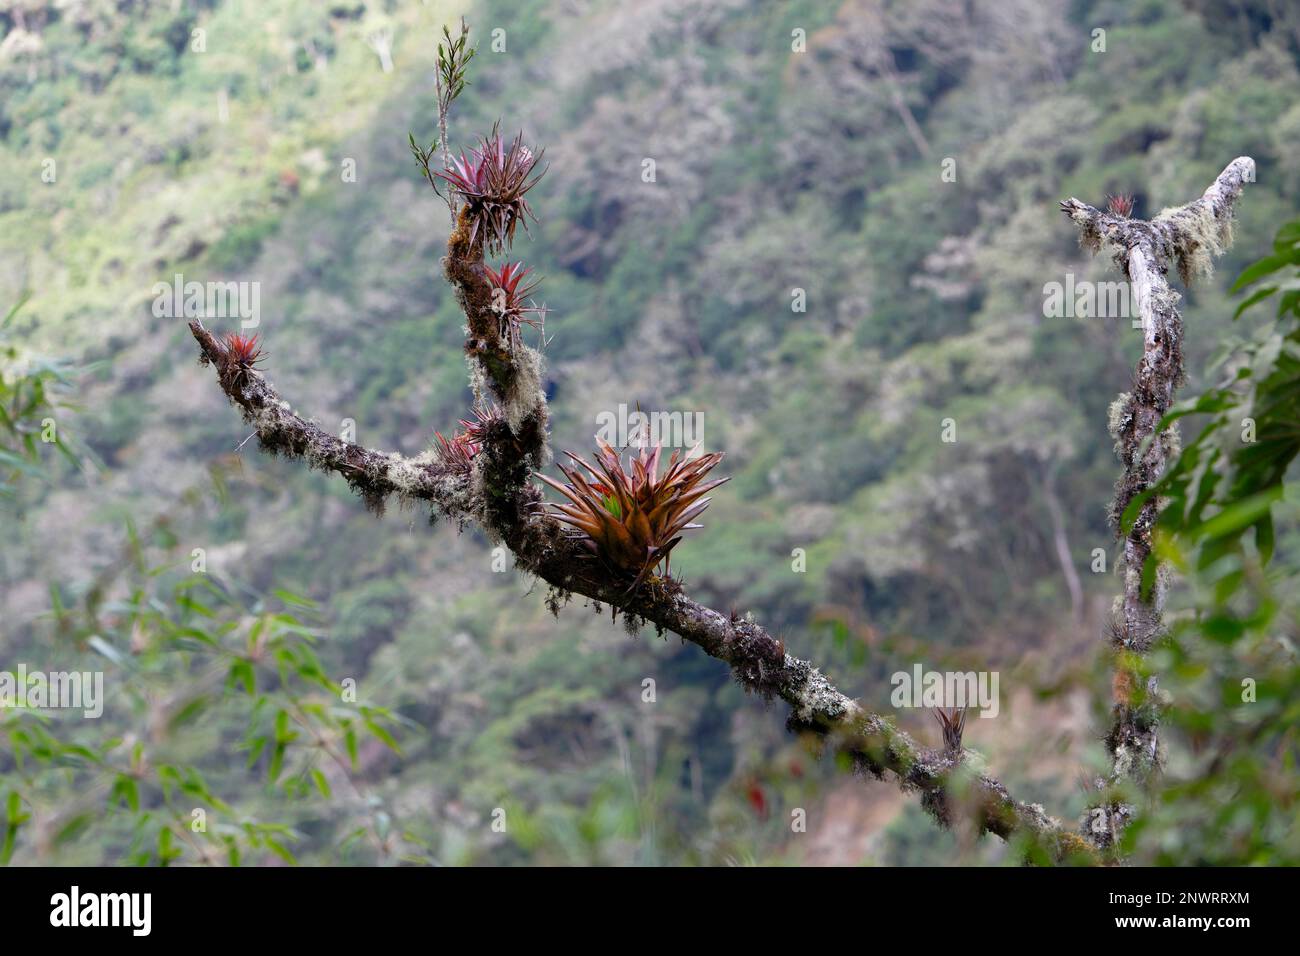 Bromelias growing on tree trunk, Tropical Cloud Forest, Manu National Park, Peru Stock Photo